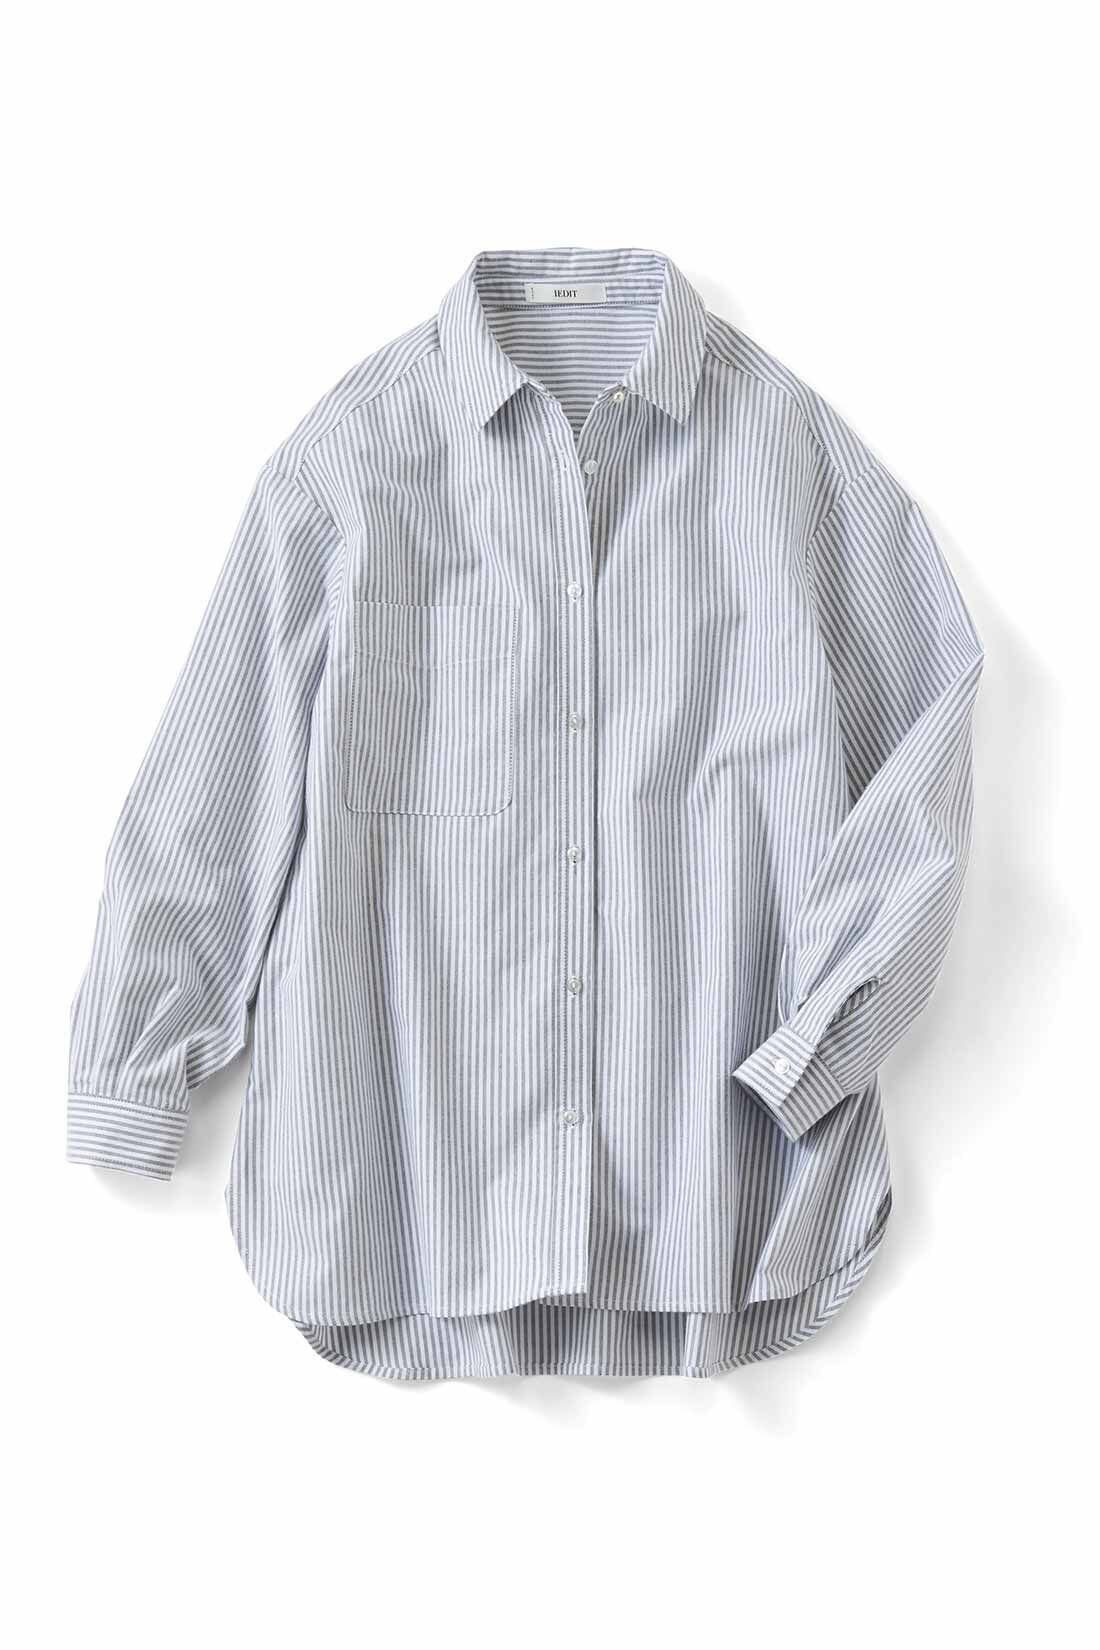 IEDIT[イディット]　バックフレアーデザインがきいた オックスフォード素材のこなれ見えシャツ〈パープル〉|グレー